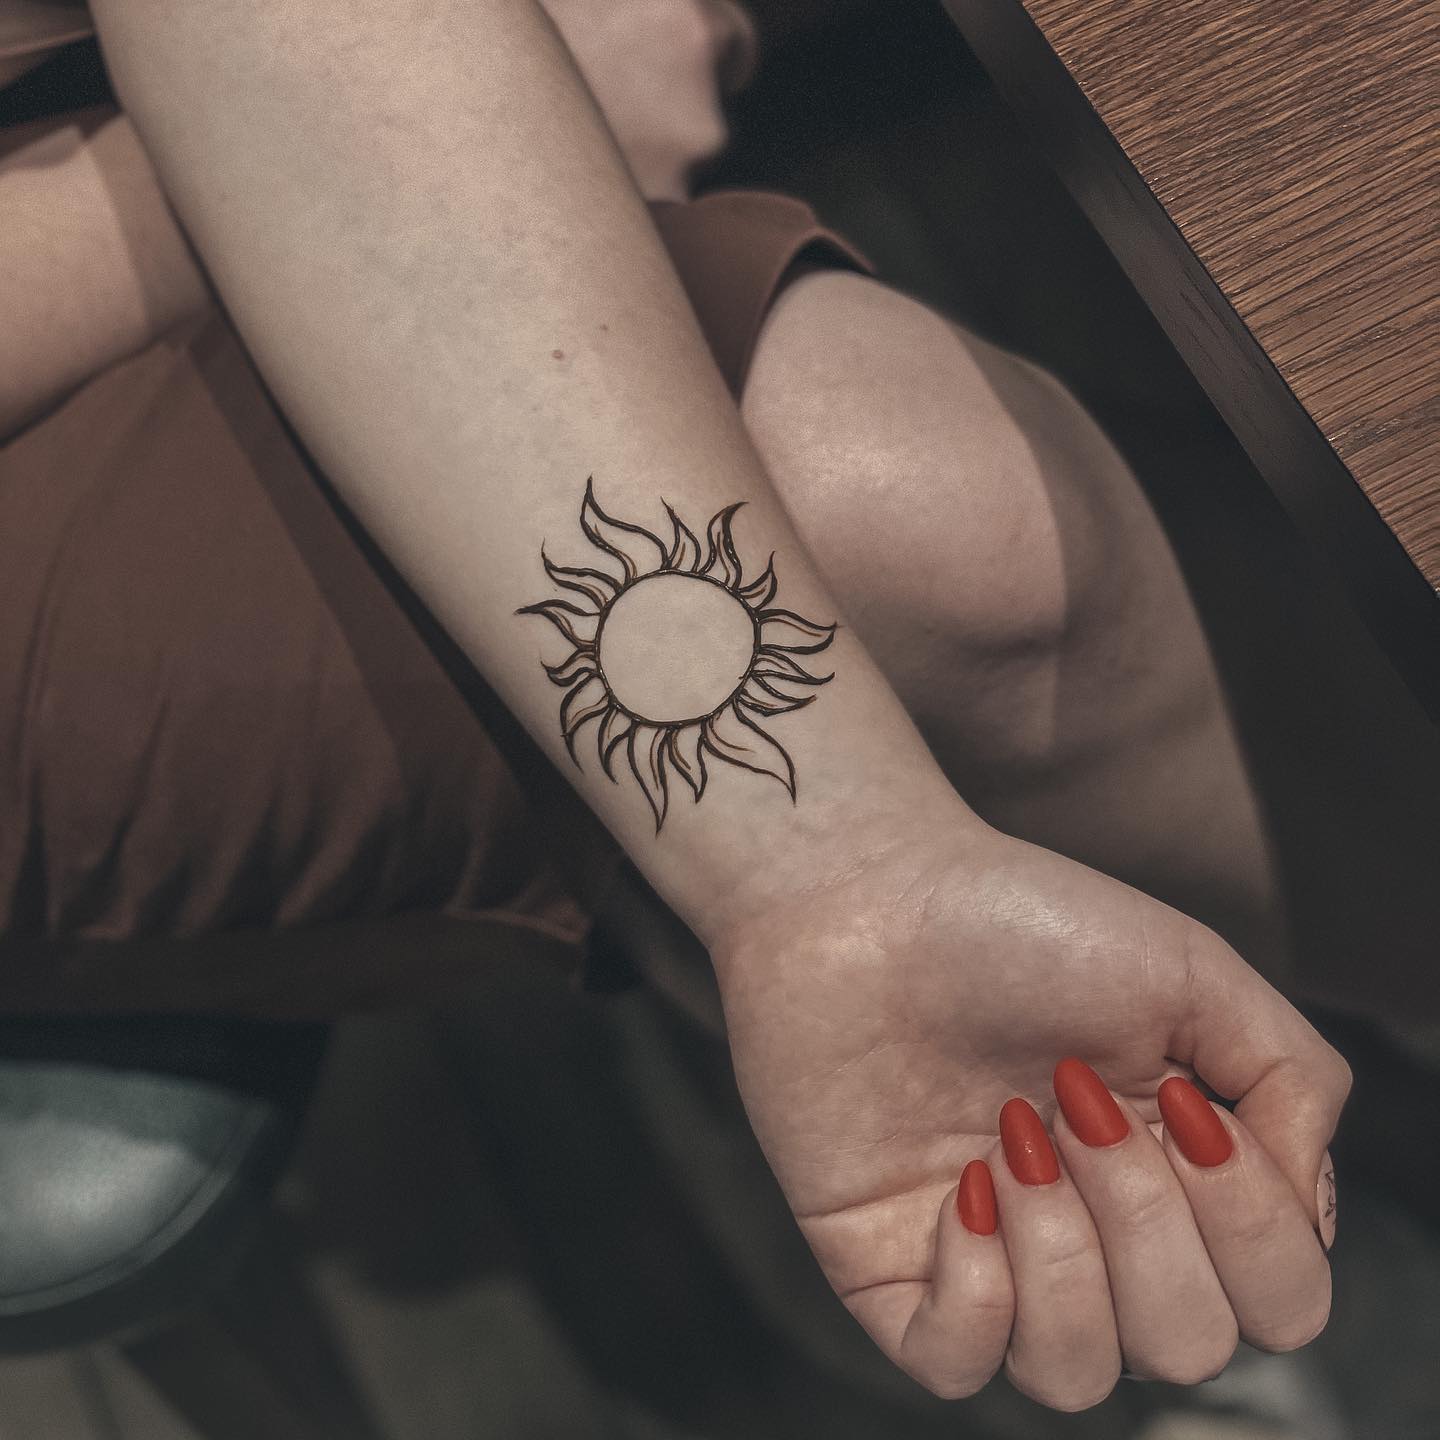 Henna Painted Tattoo on Hand Stock Image - Image of mark, dubai: 156792301